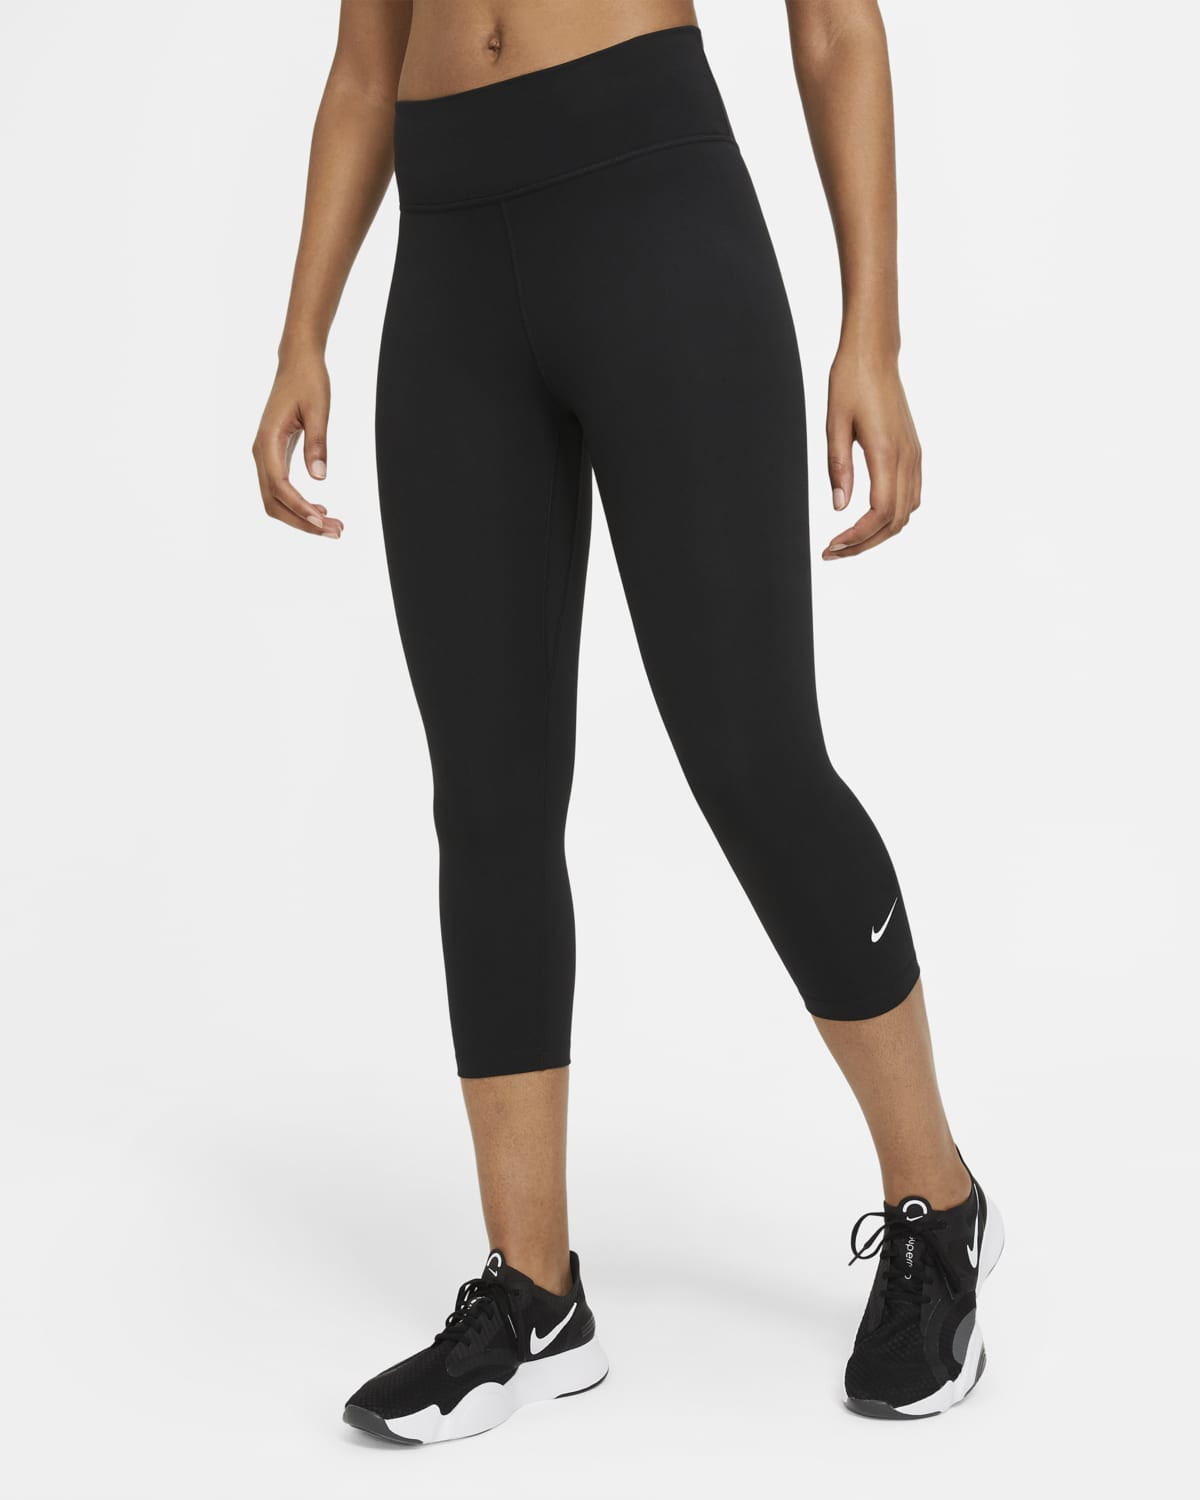 zoet Conceit Krankzinnigheid Nike Therma-FIT One Women's Mid-Rise Leggings, Black/White, L - Walmart.com